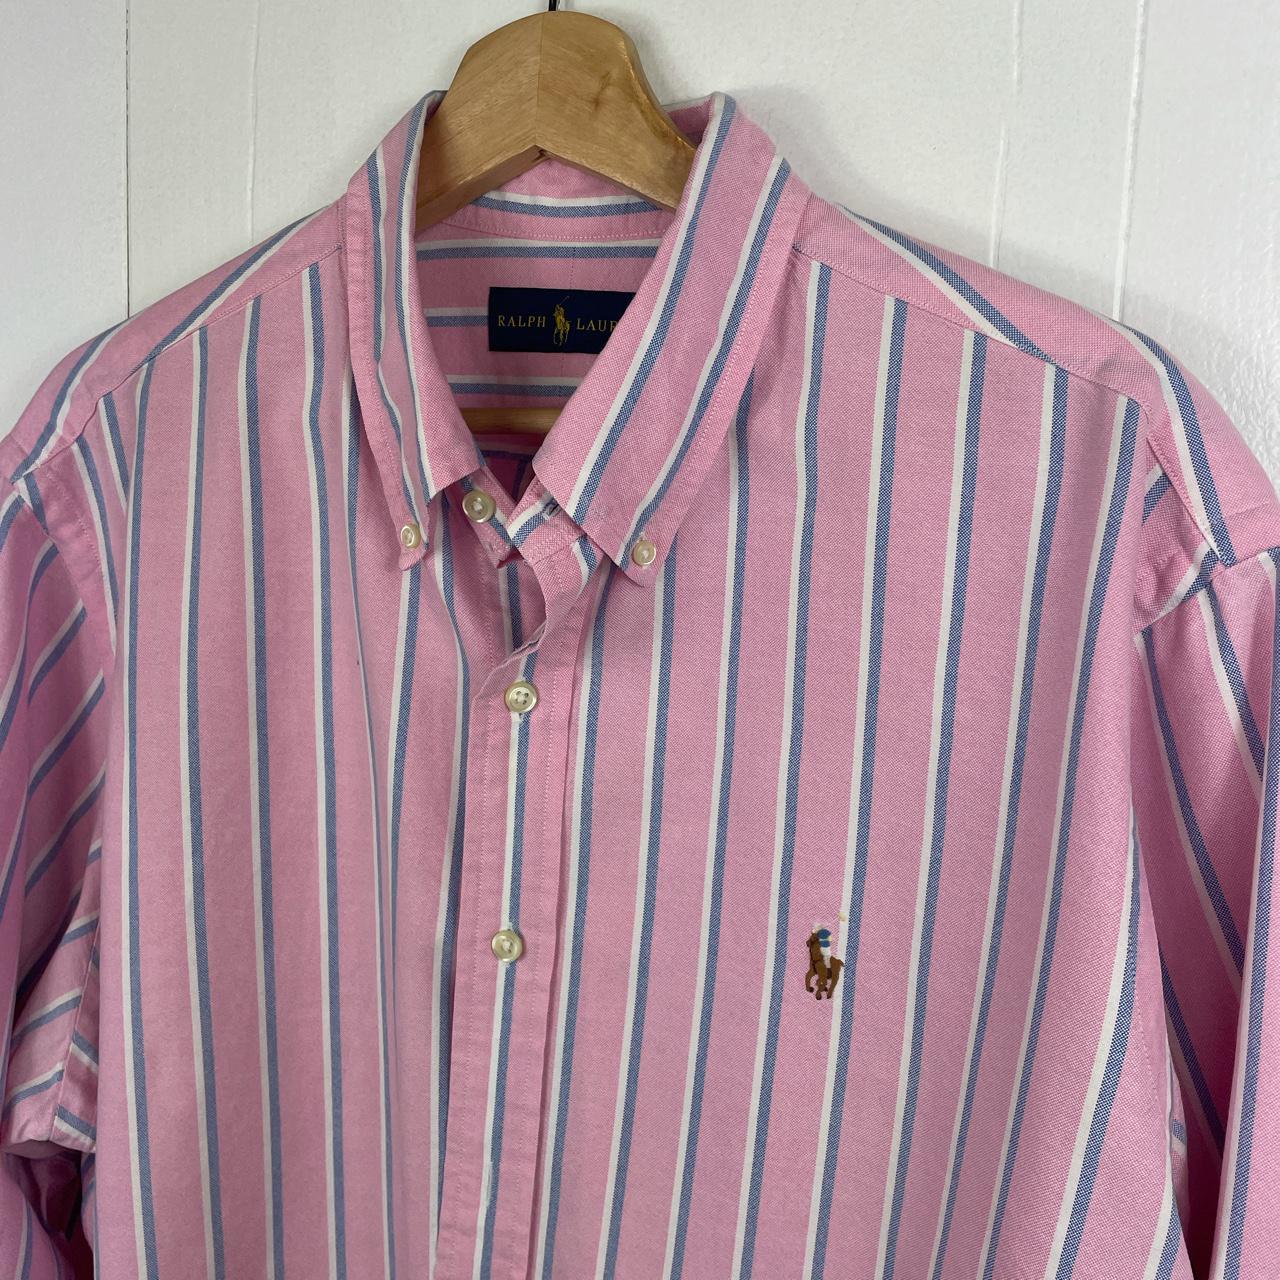 Ralph Lauren formal shirt in pink, white and blue... - Depop